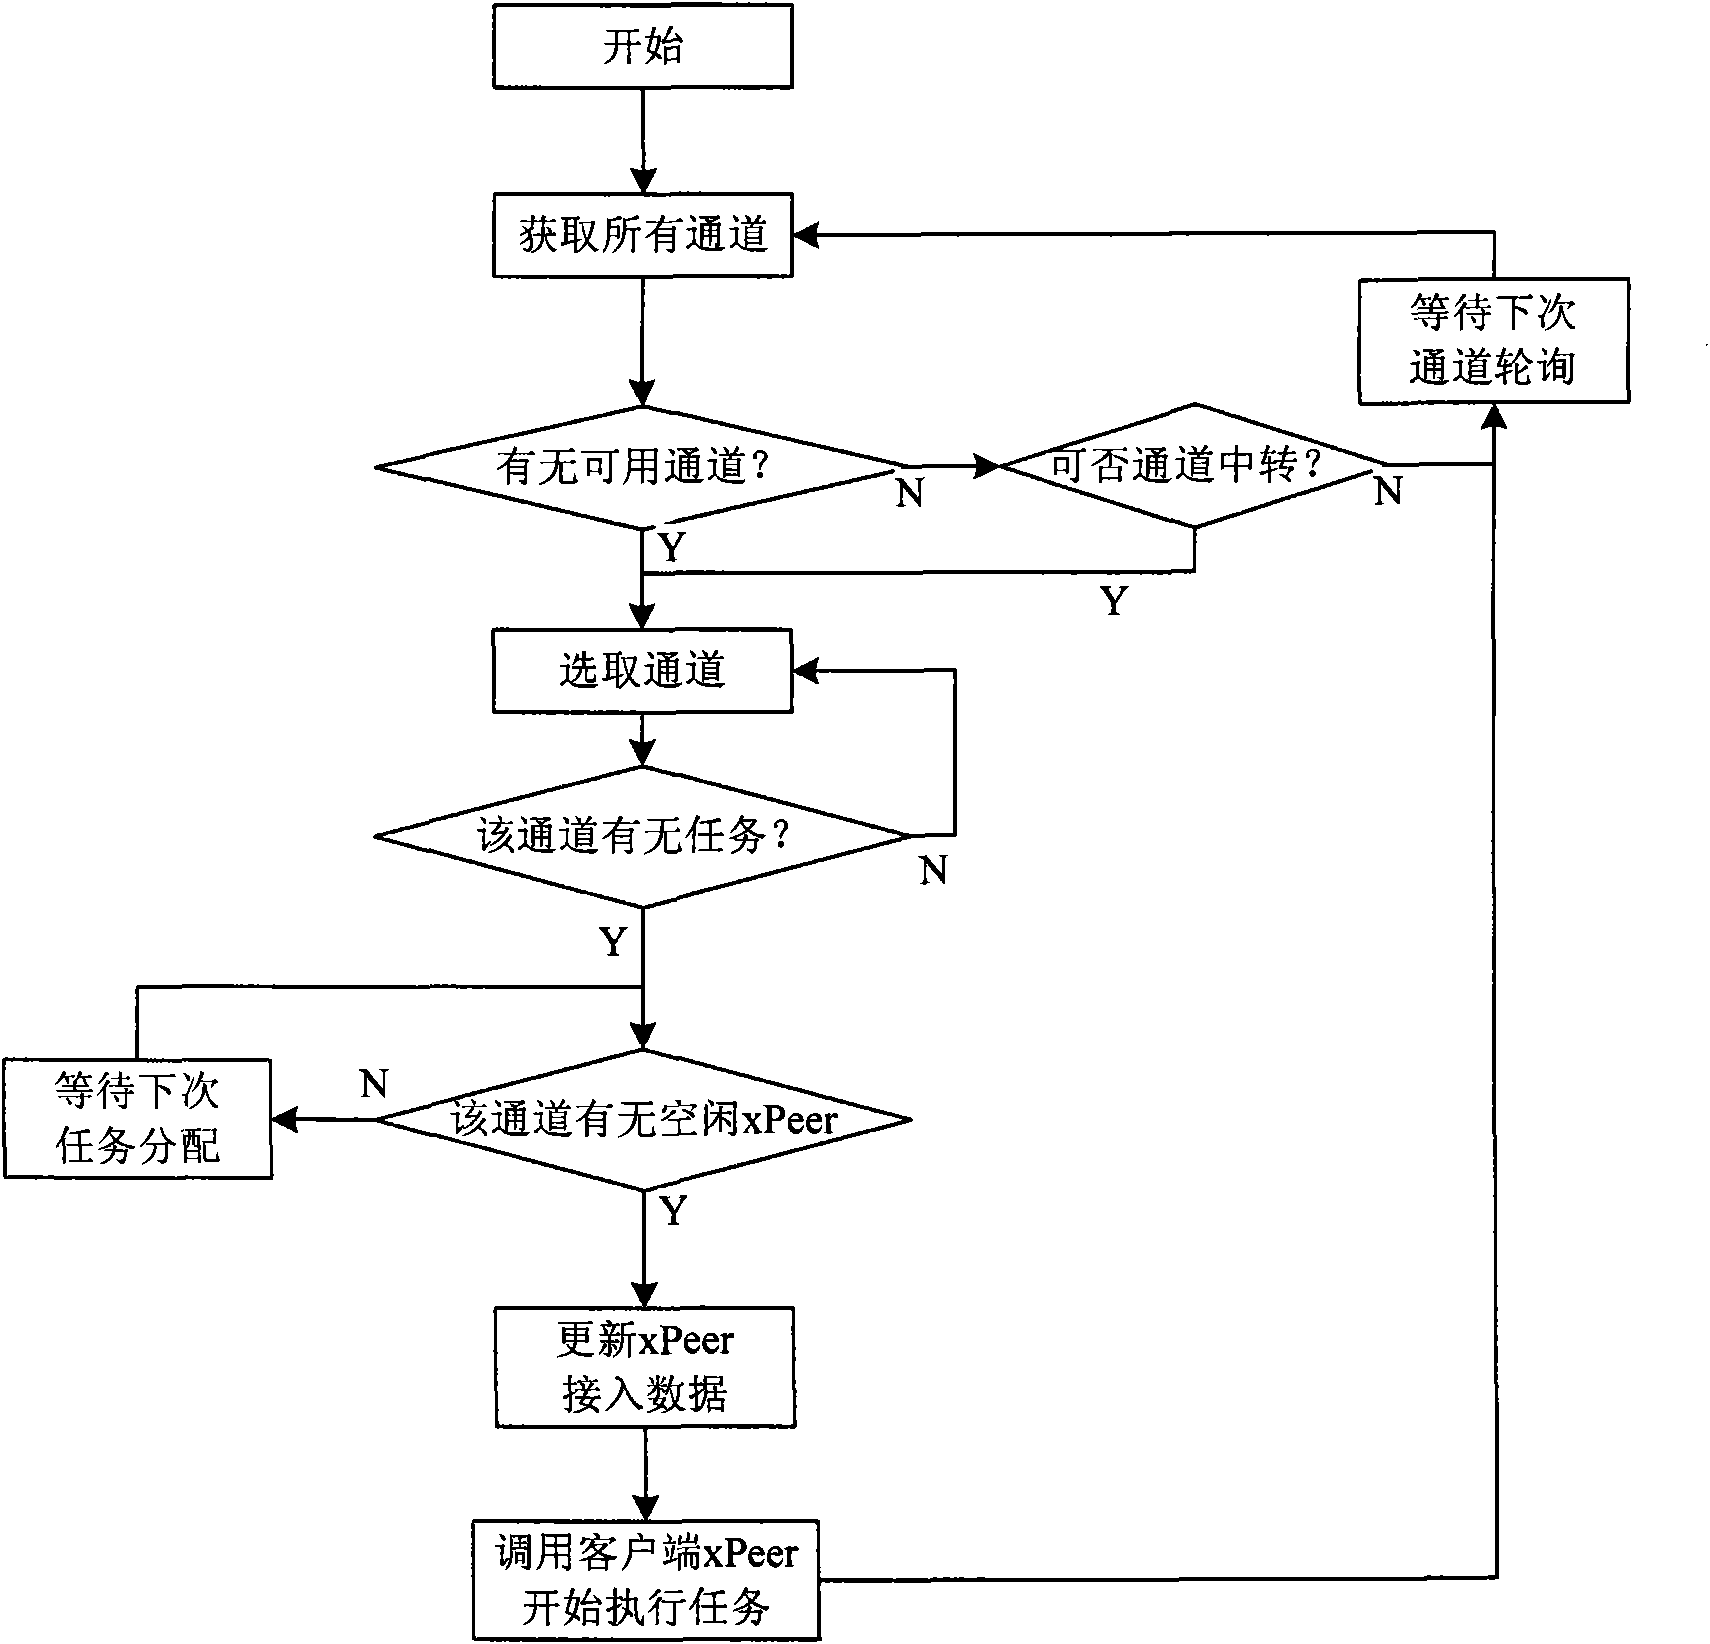 Data transmission scheduling method based on channel configuration